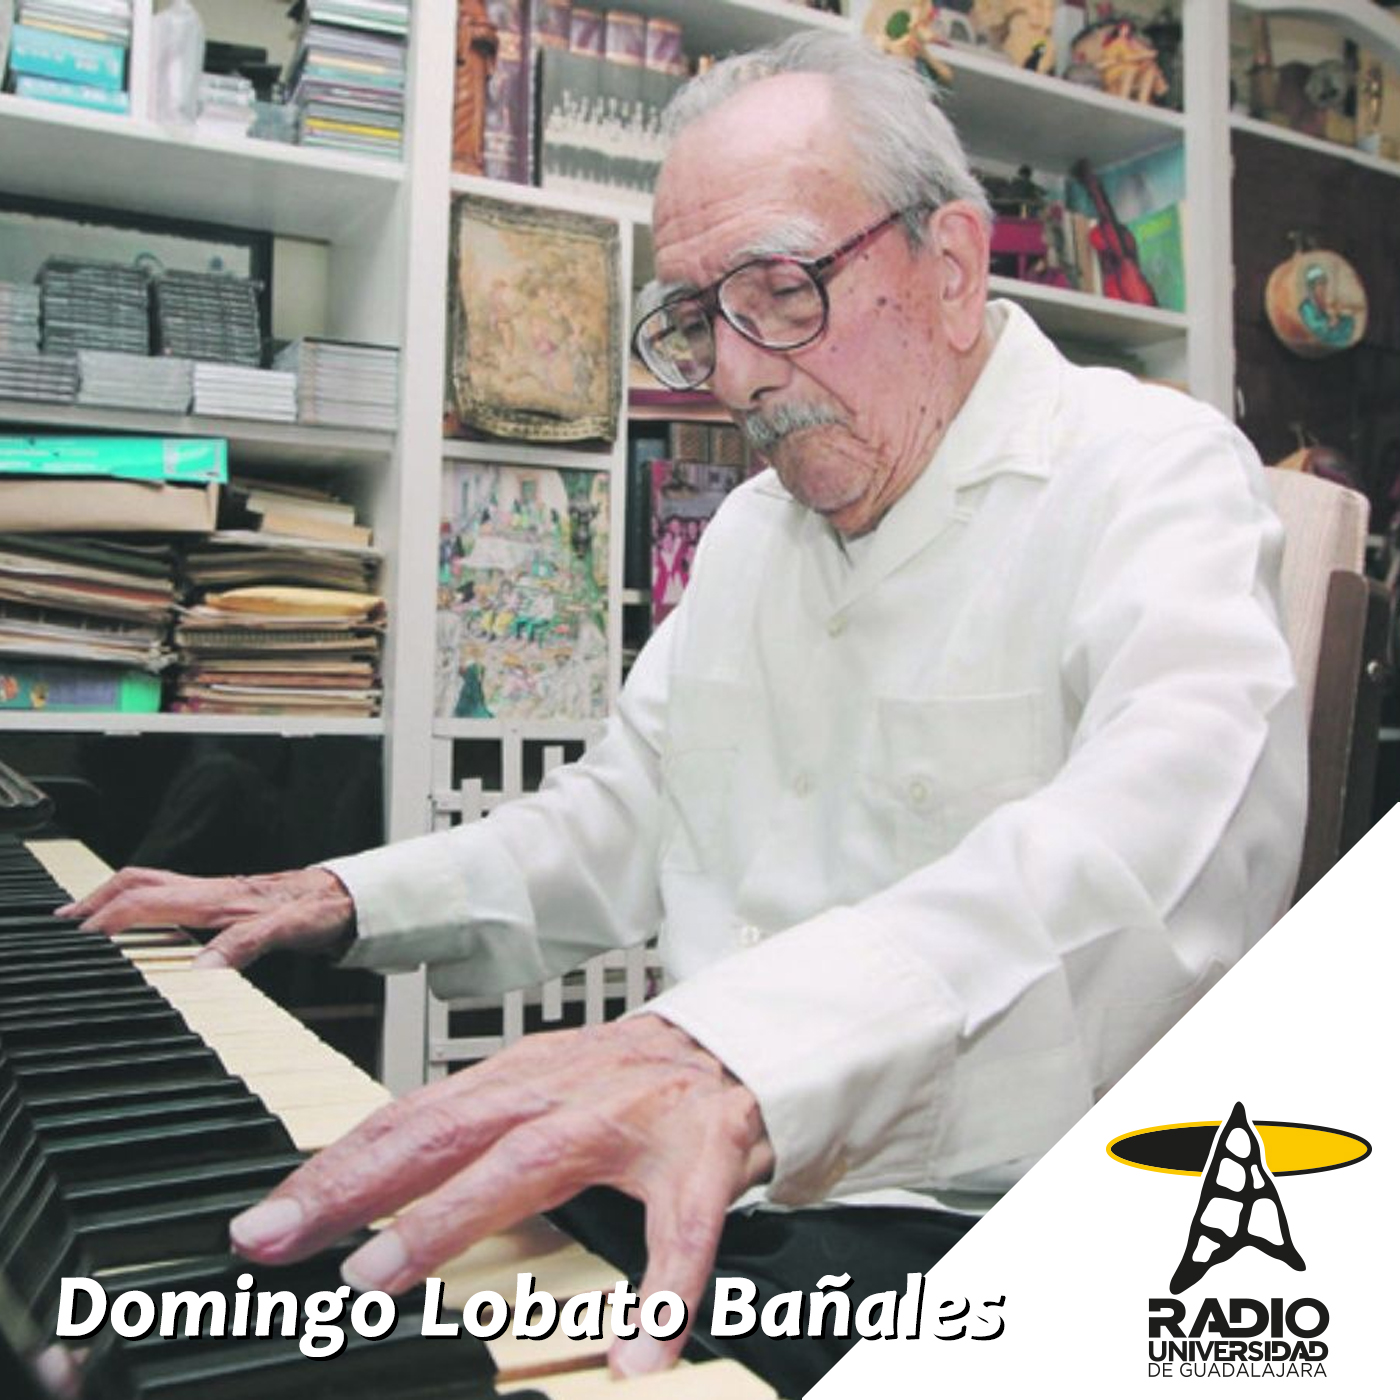 “Domingo Lobato Bañales,”: Capsula 3